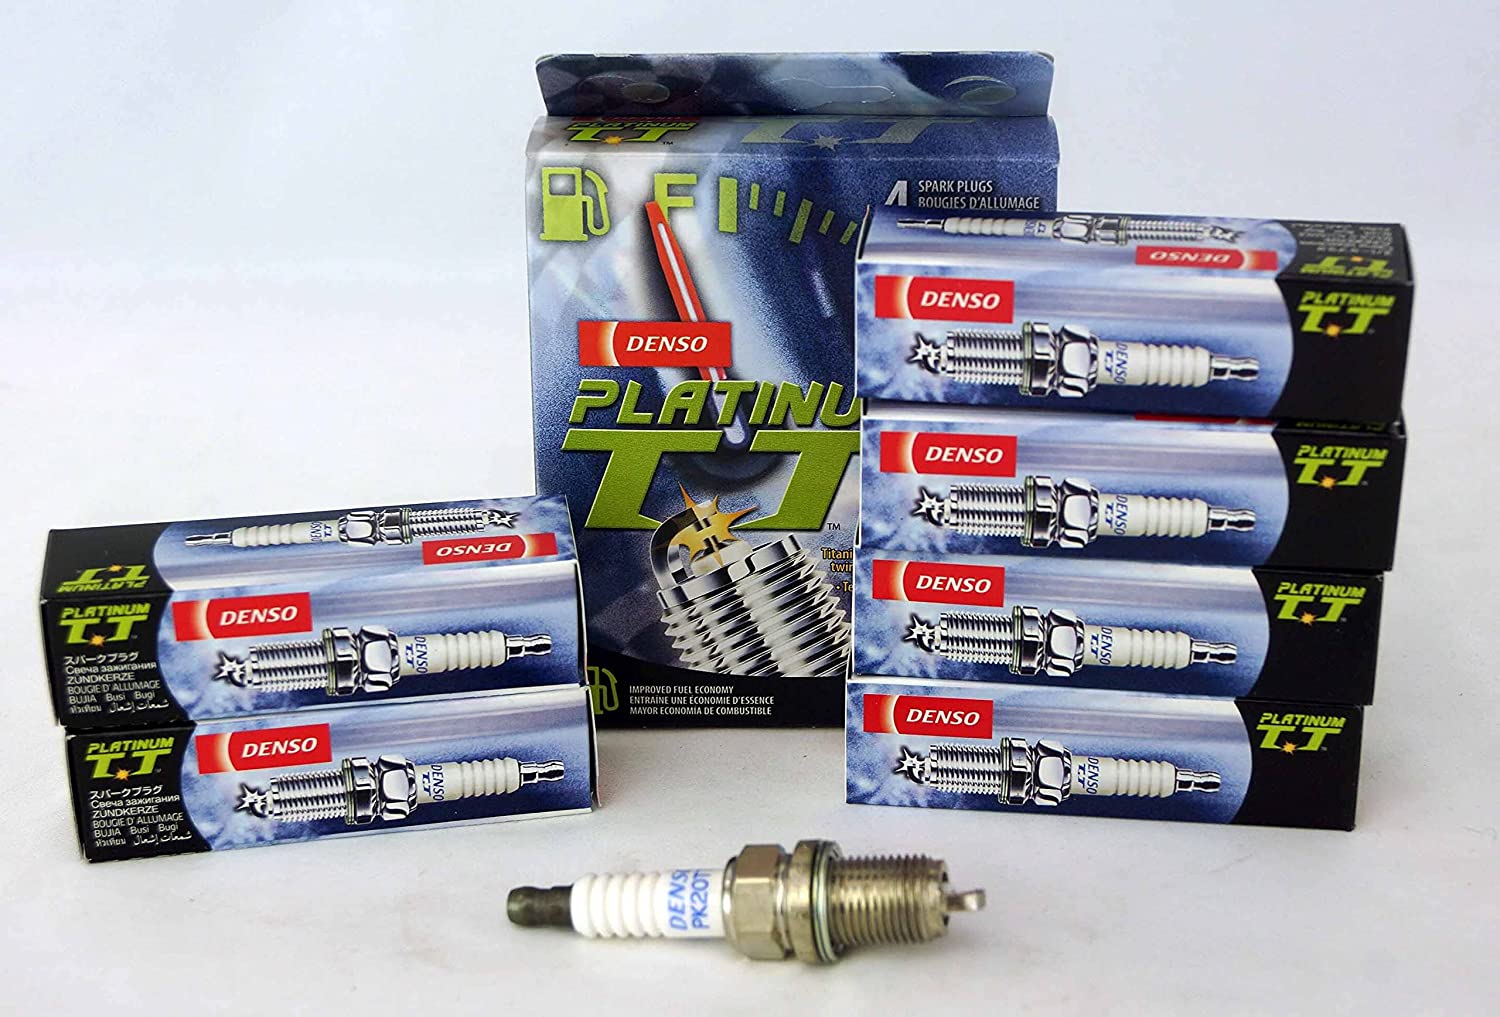 DENSO PK20TT PLATINUM T T Center Electrode Spark Plugs, 6-Pack